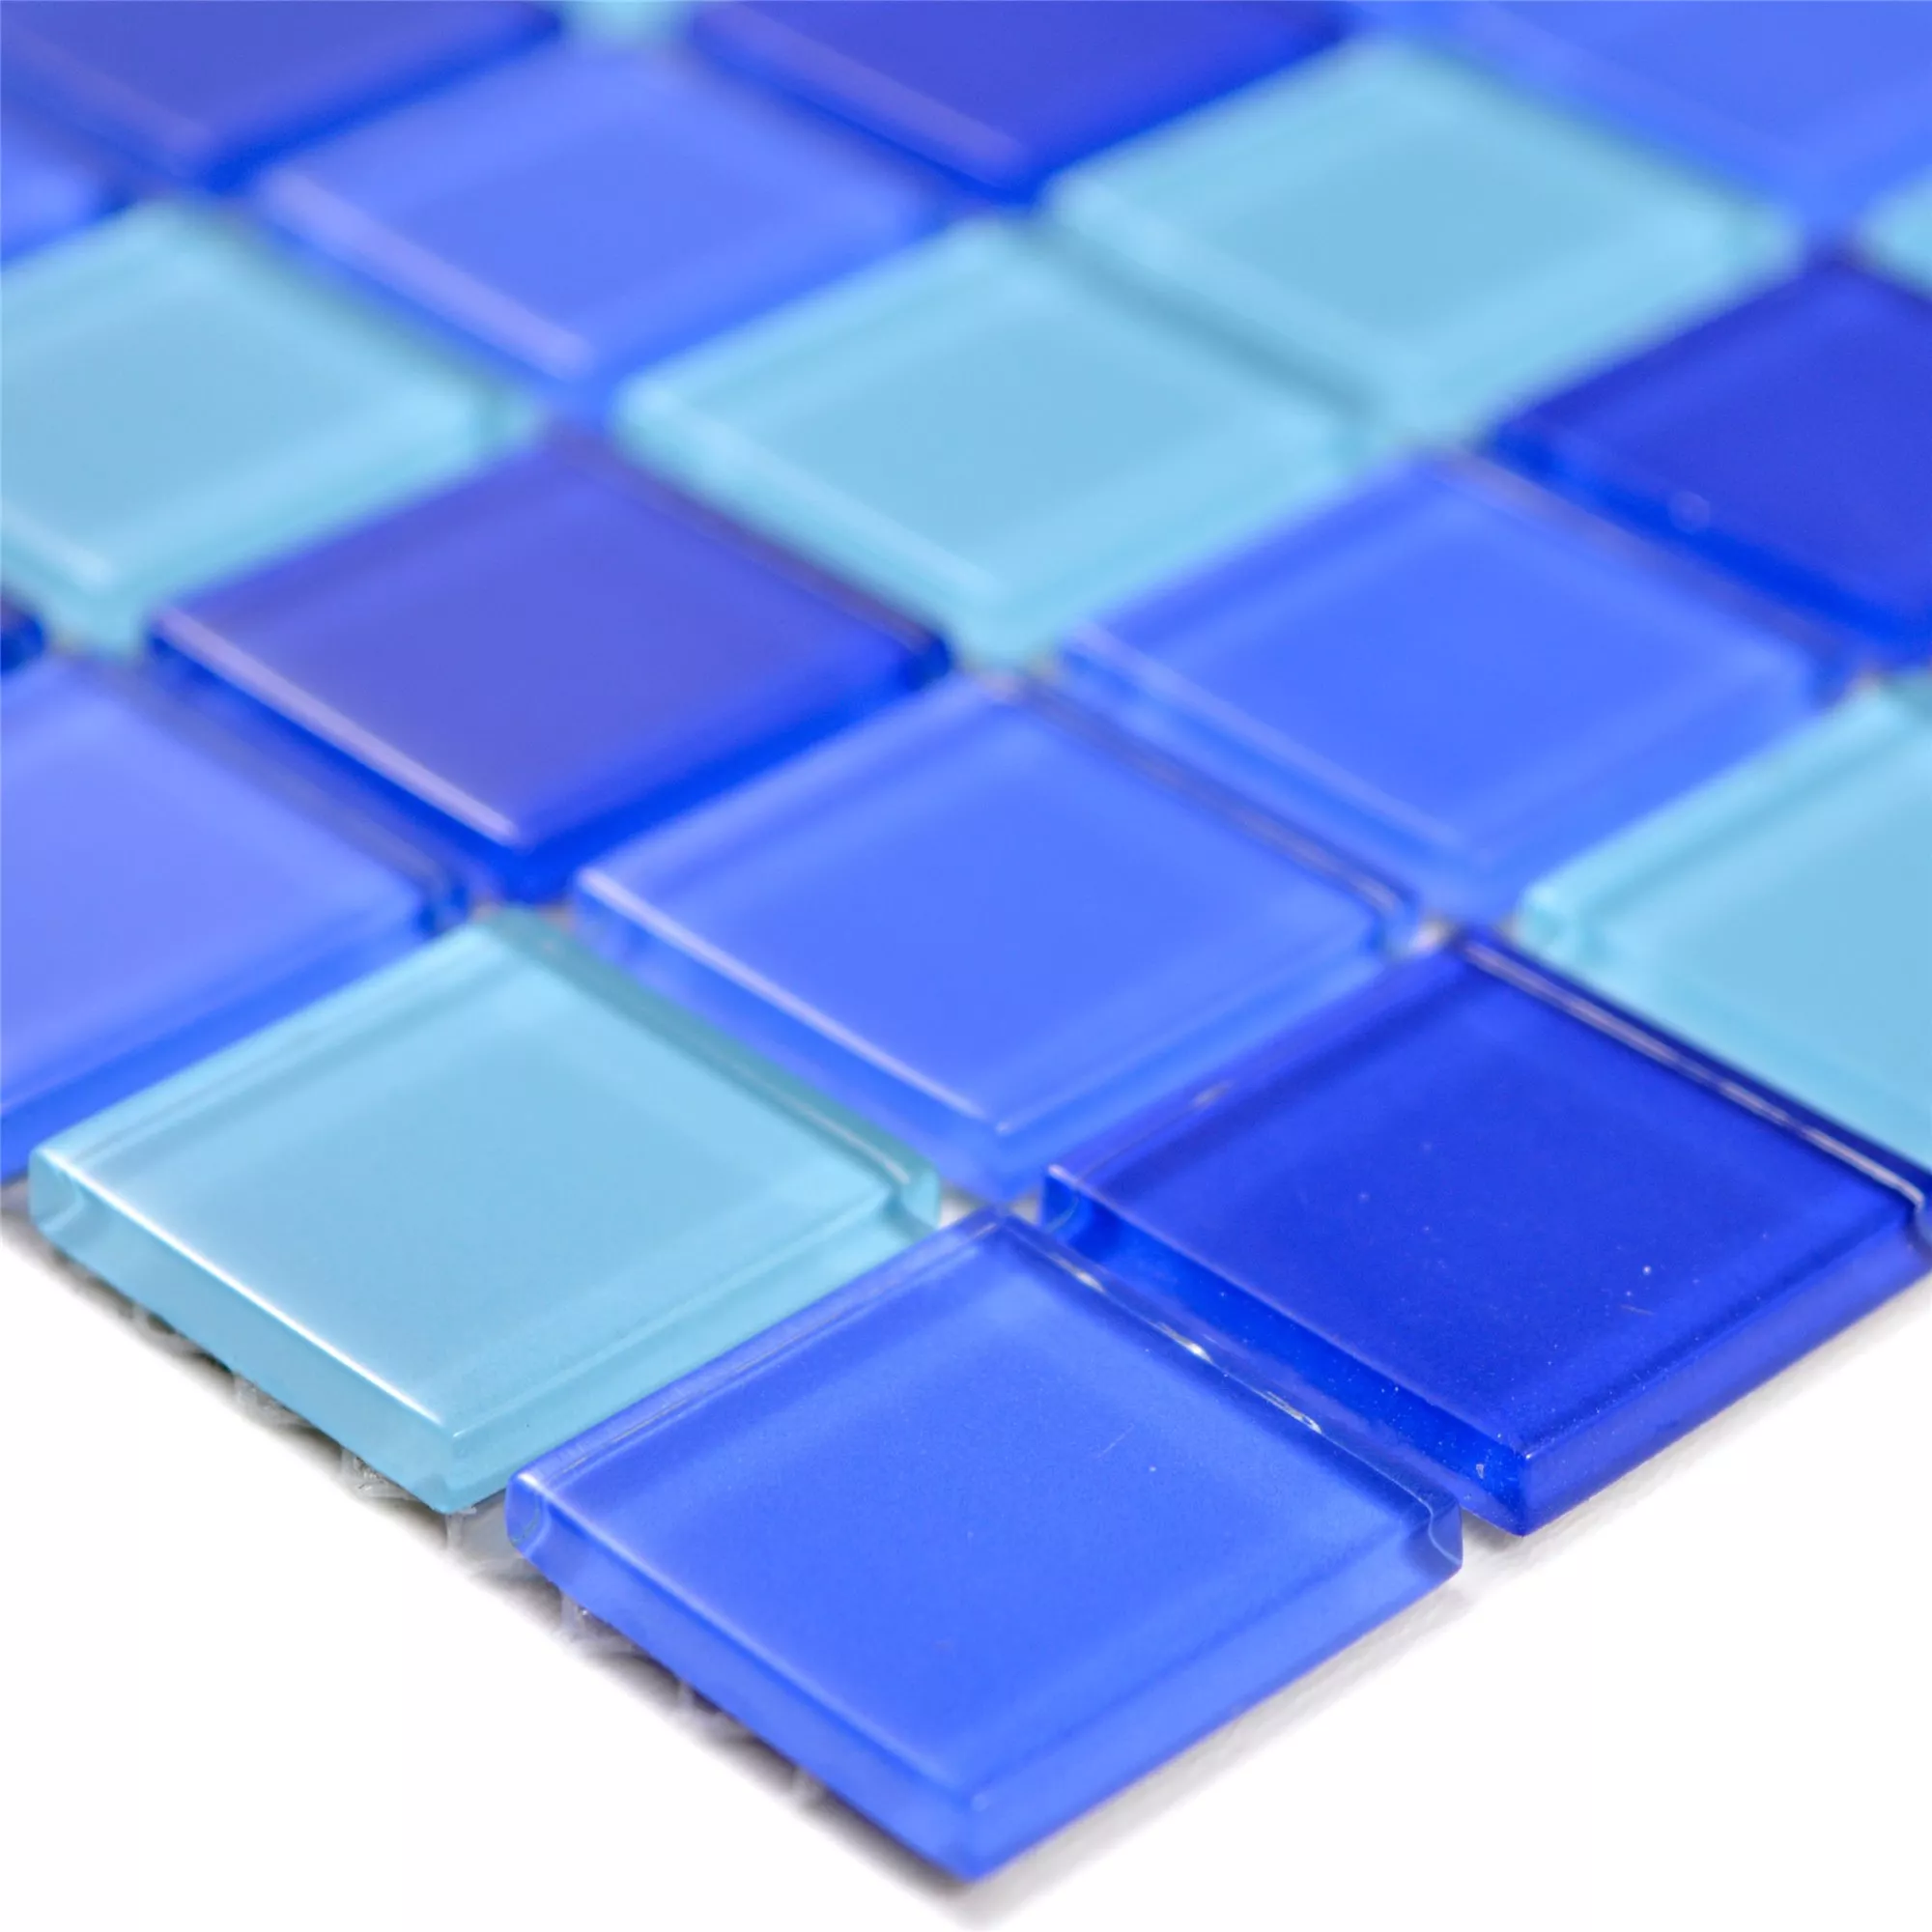 Mosaico De Cristal Azulejos Bommel Azul